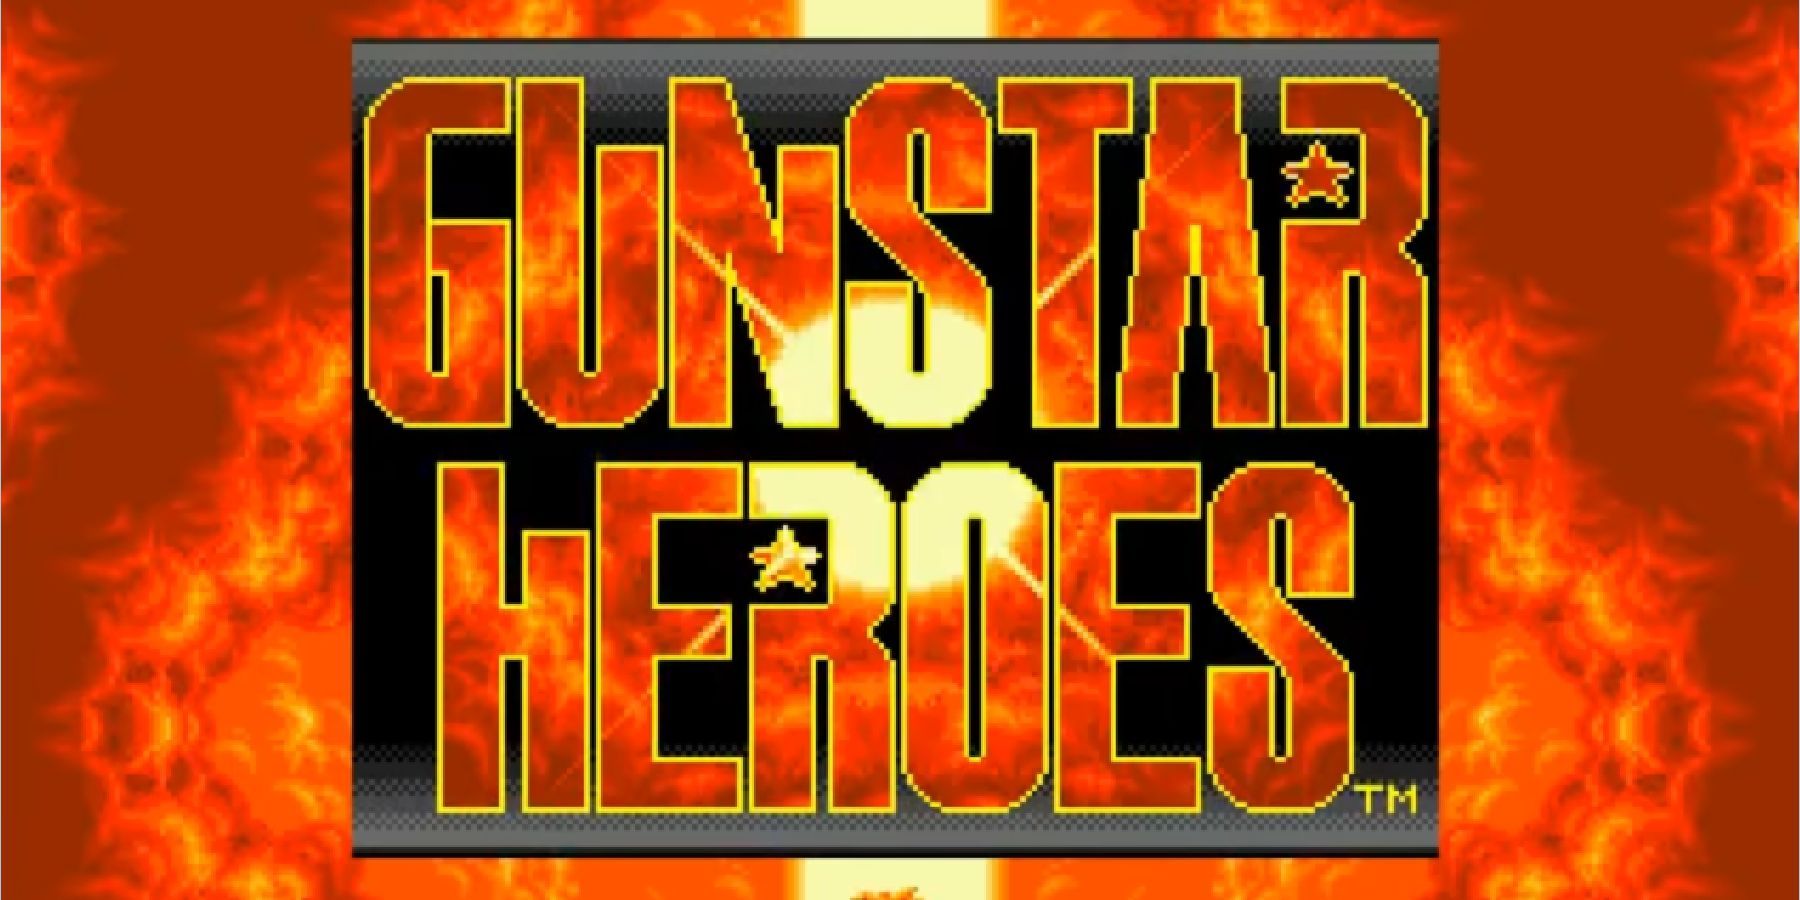 gunstar heroes title screen featured